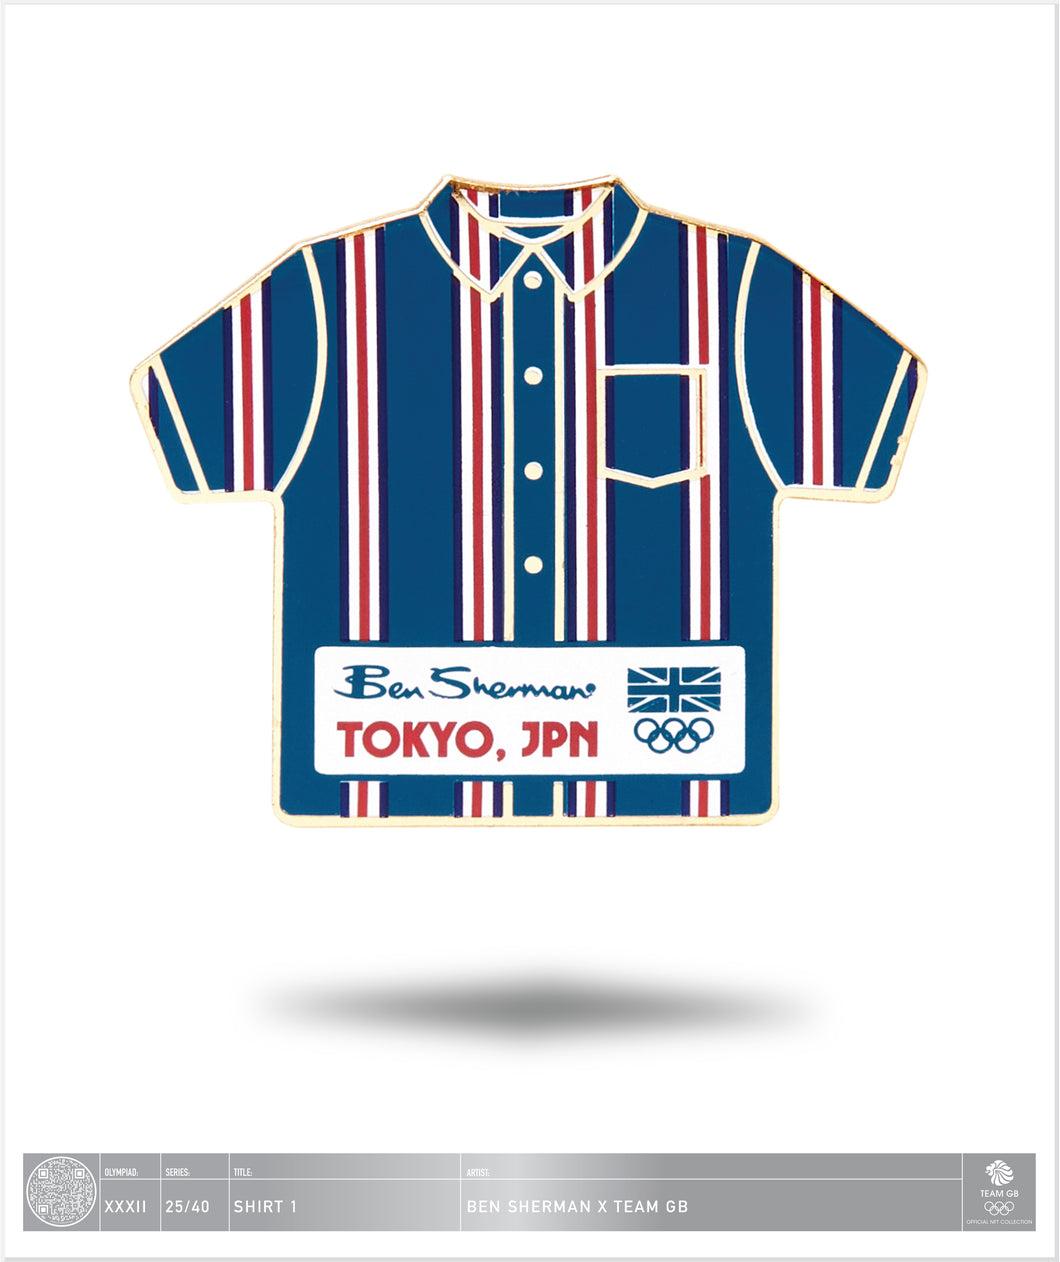 Ben Sherman Tokyo - Shirt 1 - 25 / 40